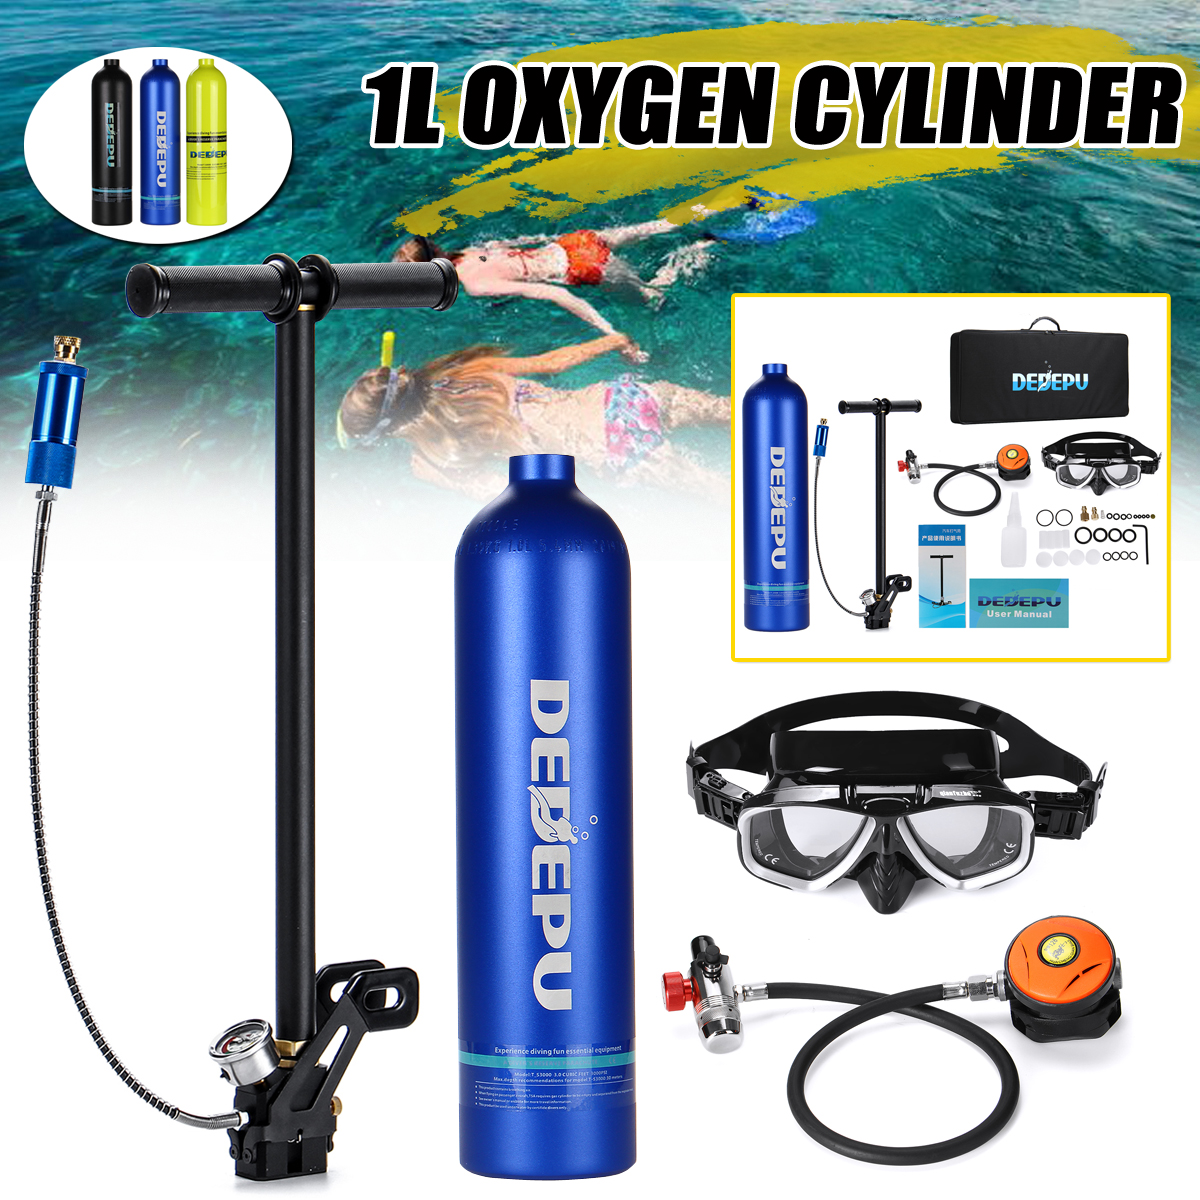 DIDEEP-1L-Portable-Mini-Oxygen-Cylinder-Air-Oxygen-Tank-Breath-Diving-Underwater-Oxygen-Cylinder-1617256